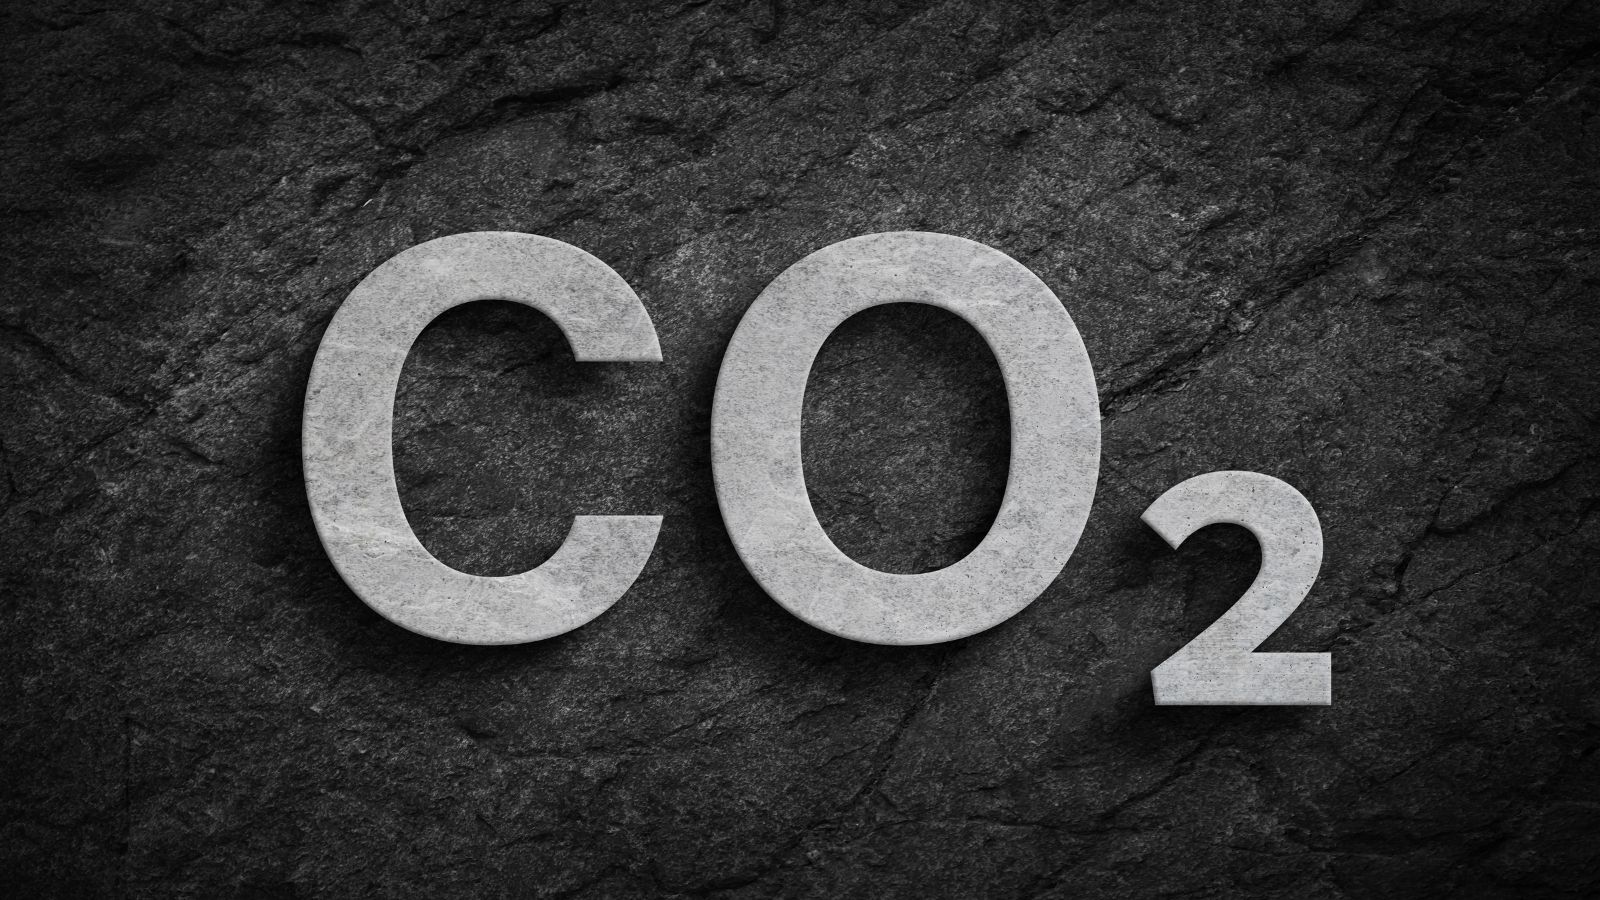 CO2 adsorption